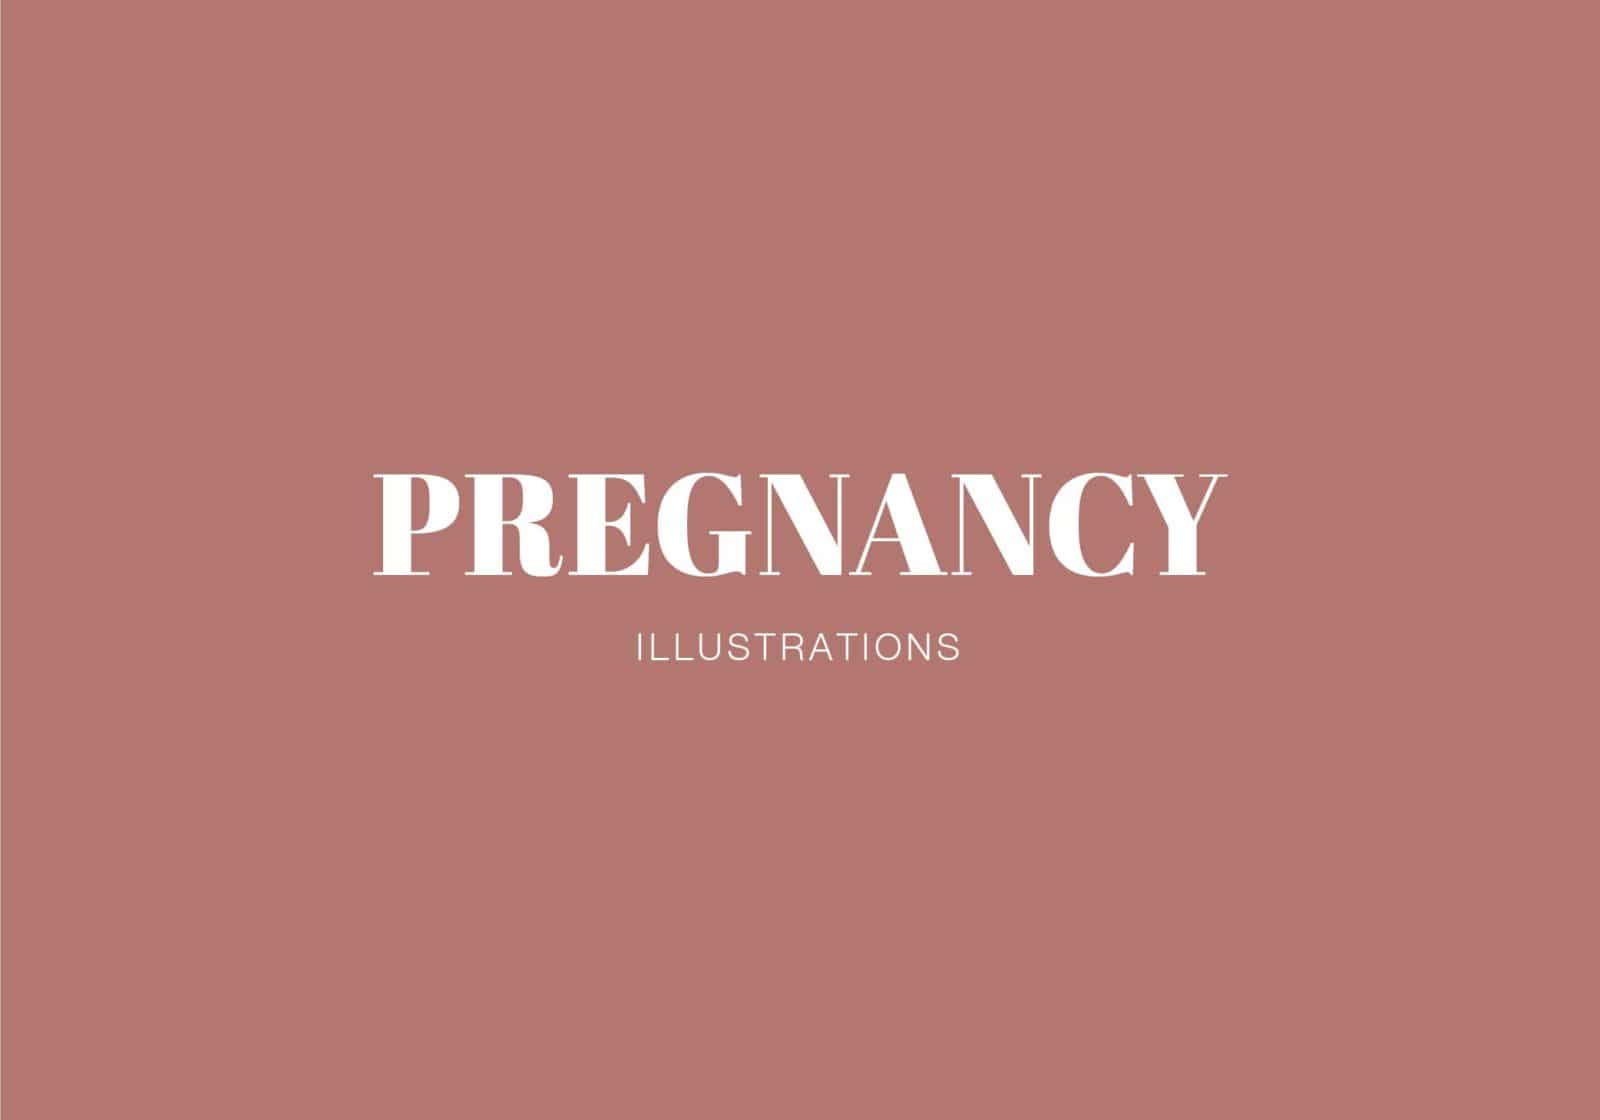 designs by duvet days_category_pregnancy